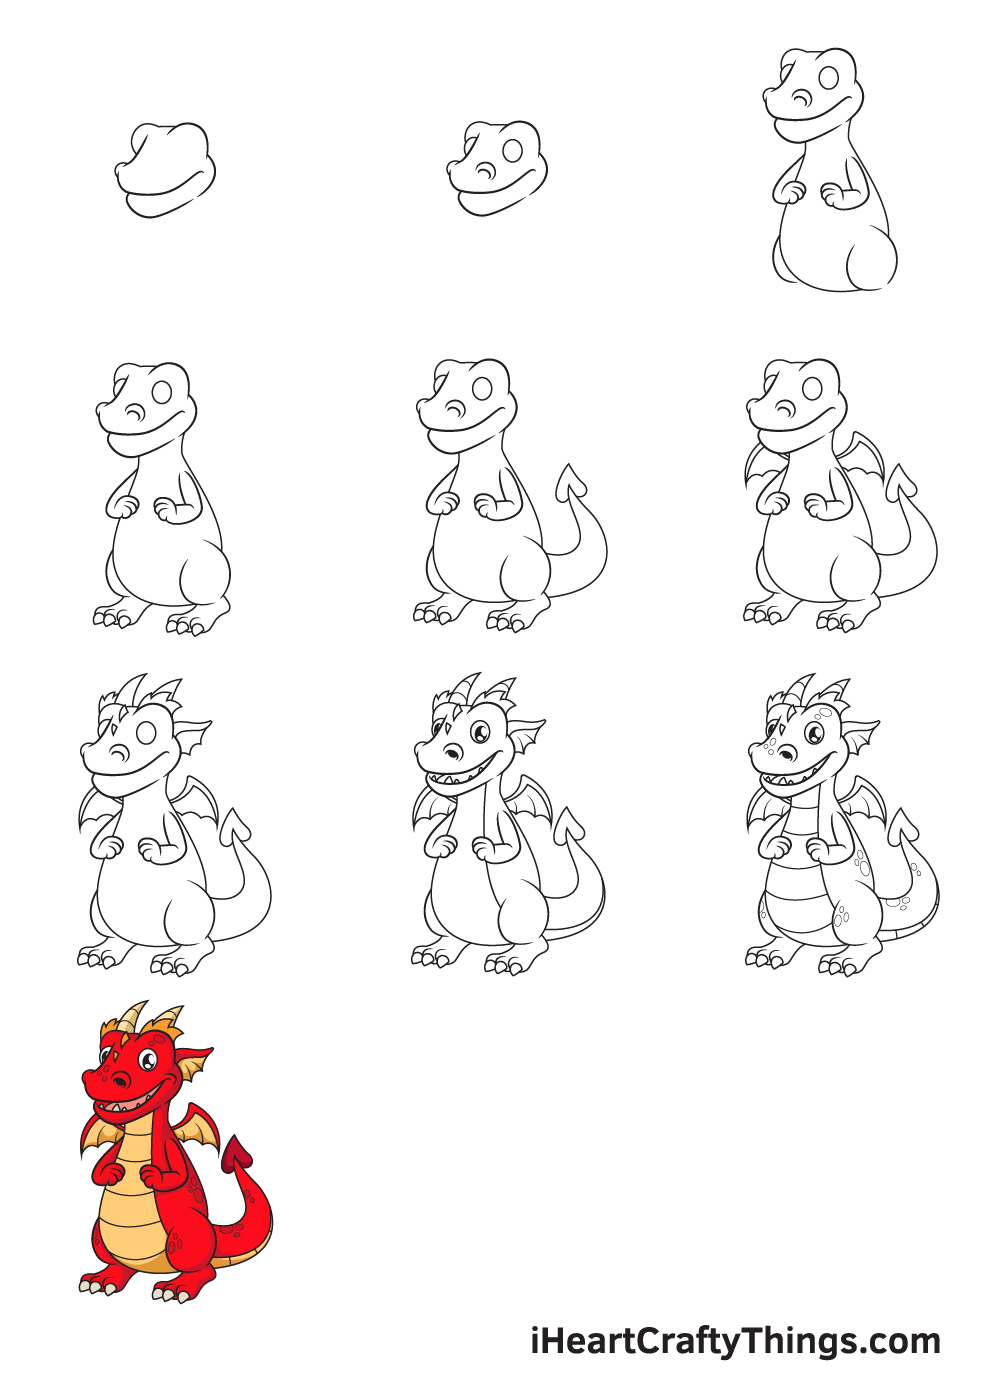 Рисуем дракона за 9 простых шагов